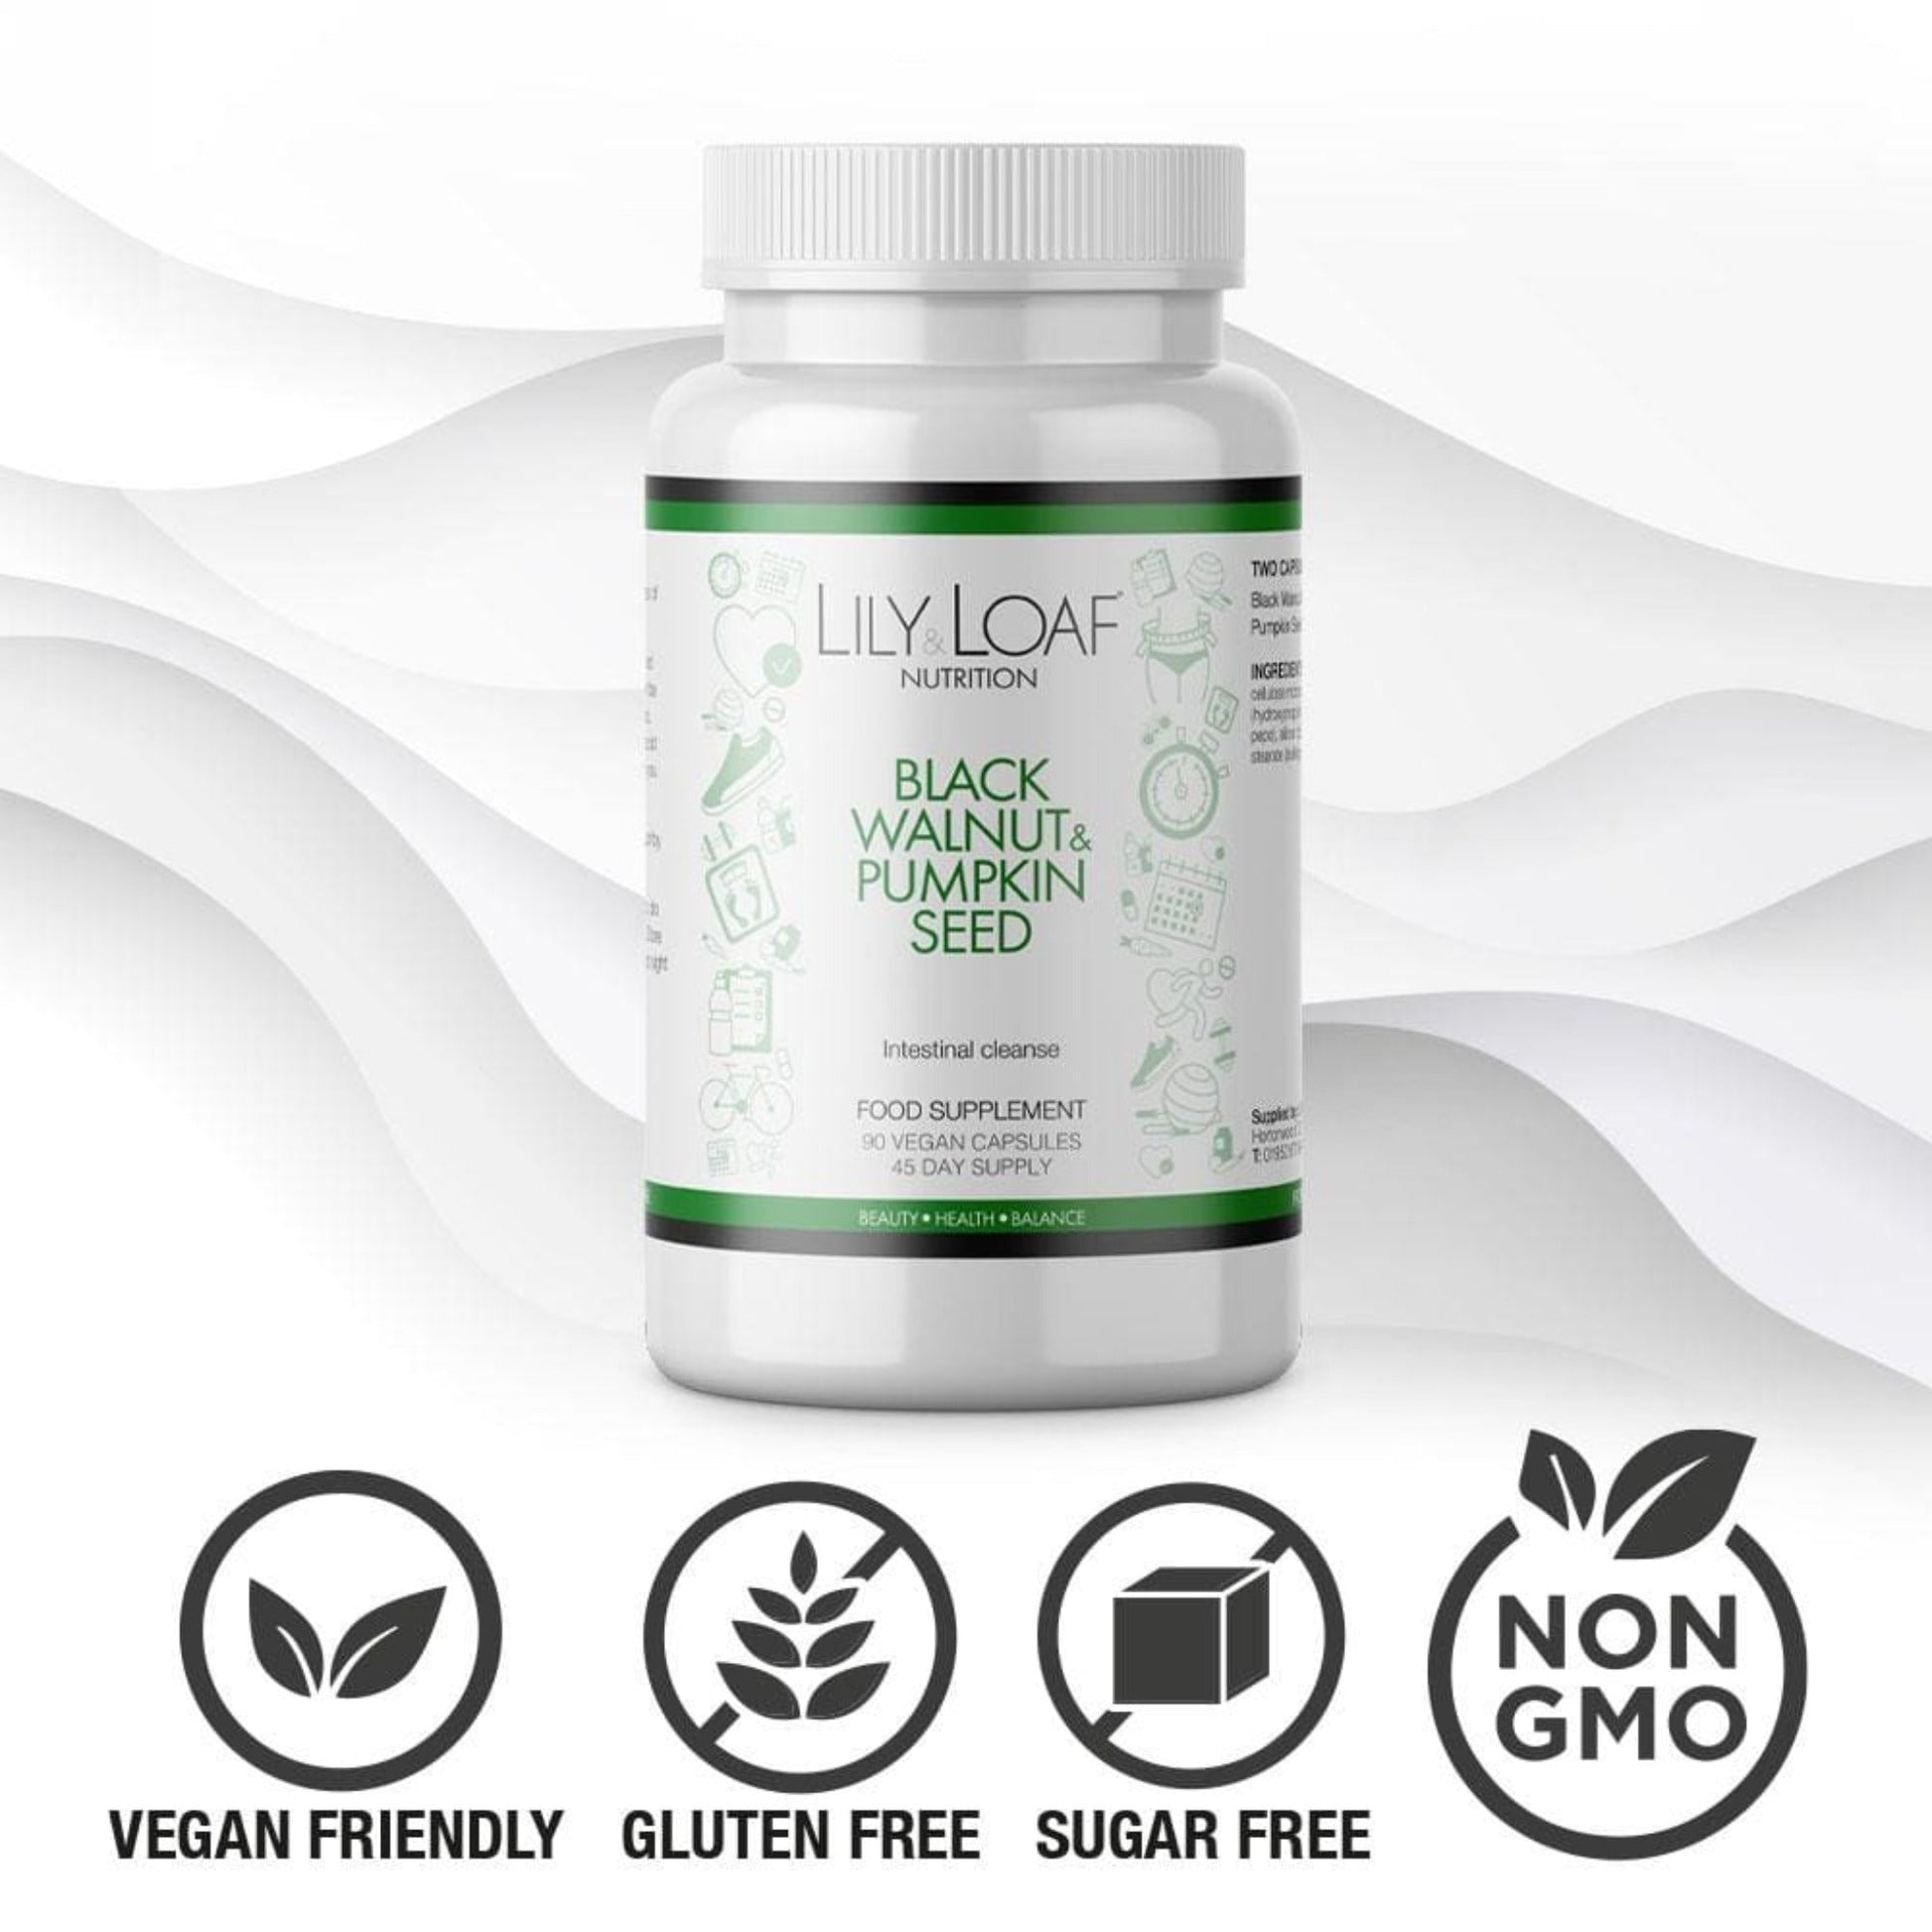 Lily & Loaf Black Walnut & Pumpkin Seed Intestinal Cleanse is vegan friendly, non-GMO, gluten free and sugar free